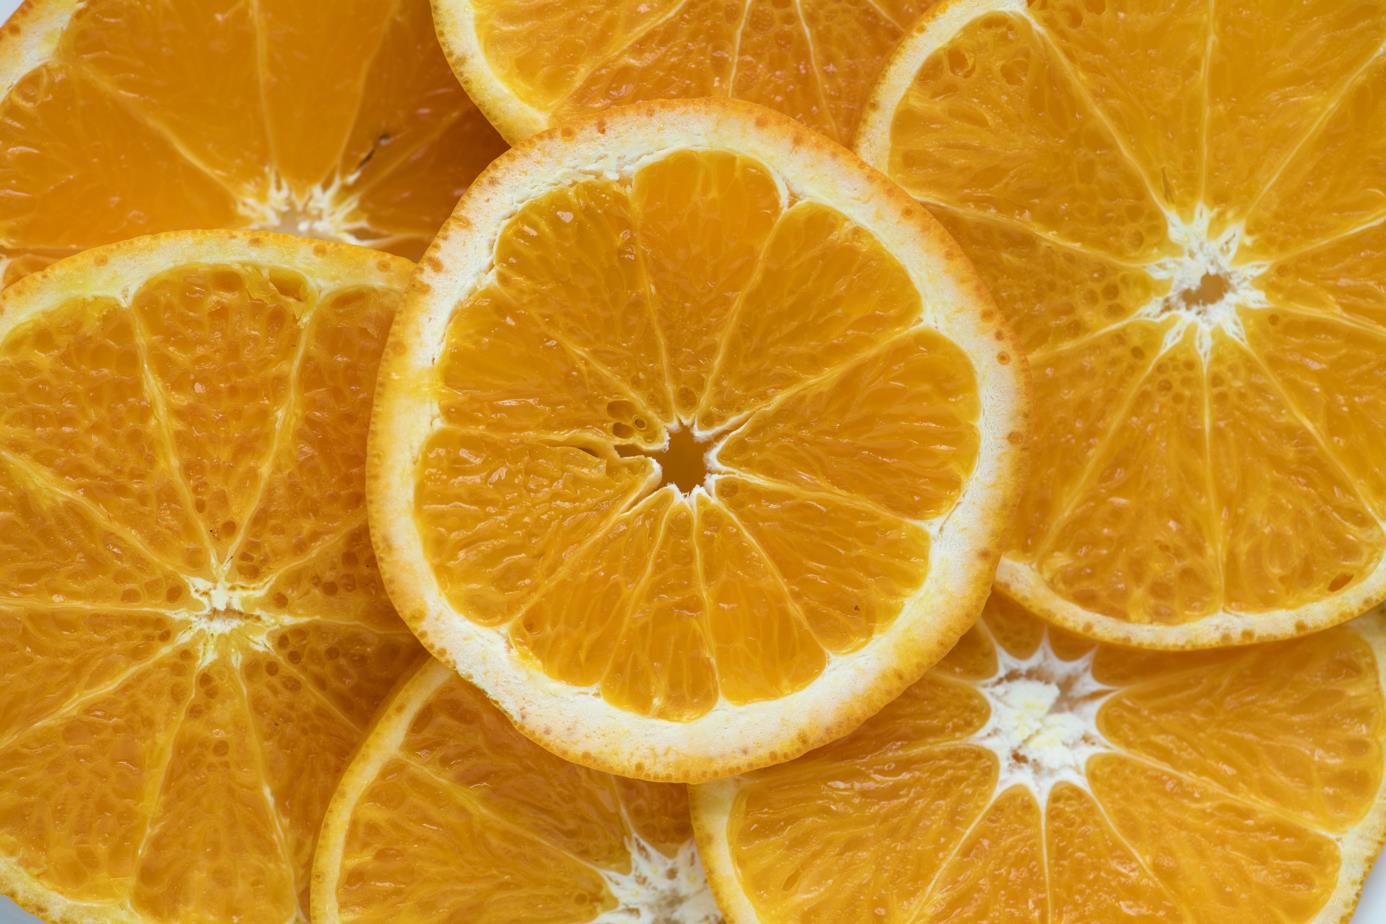 how to cut orange into wheels